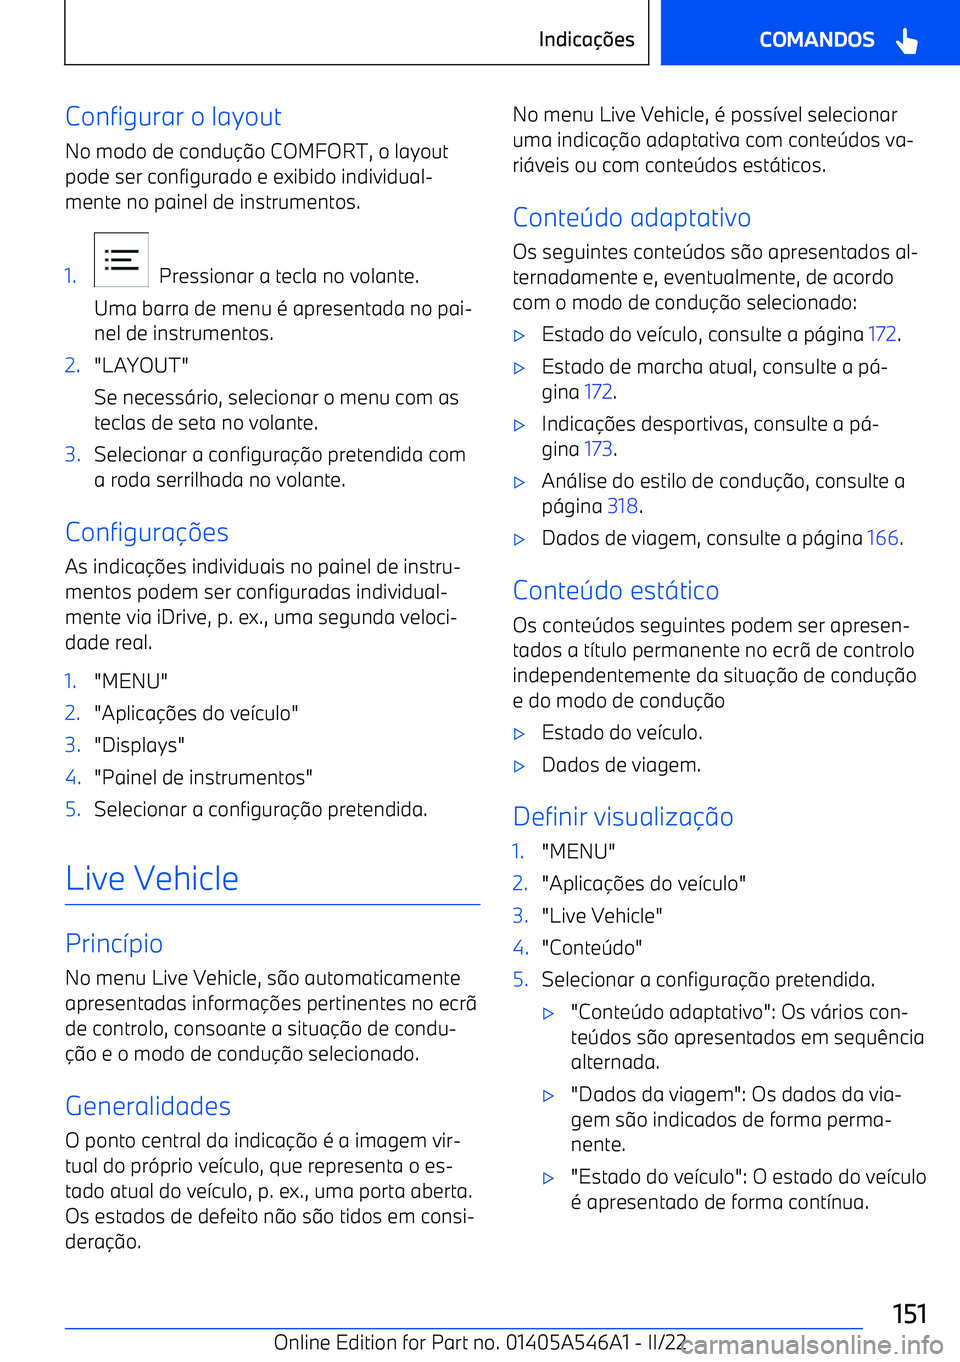 BMW I4 2022  Manual do condutor (in Portuguese) Configurar o layoutNo modo de condu o COMFORT, o layout
pode ser configurado e exibido individual